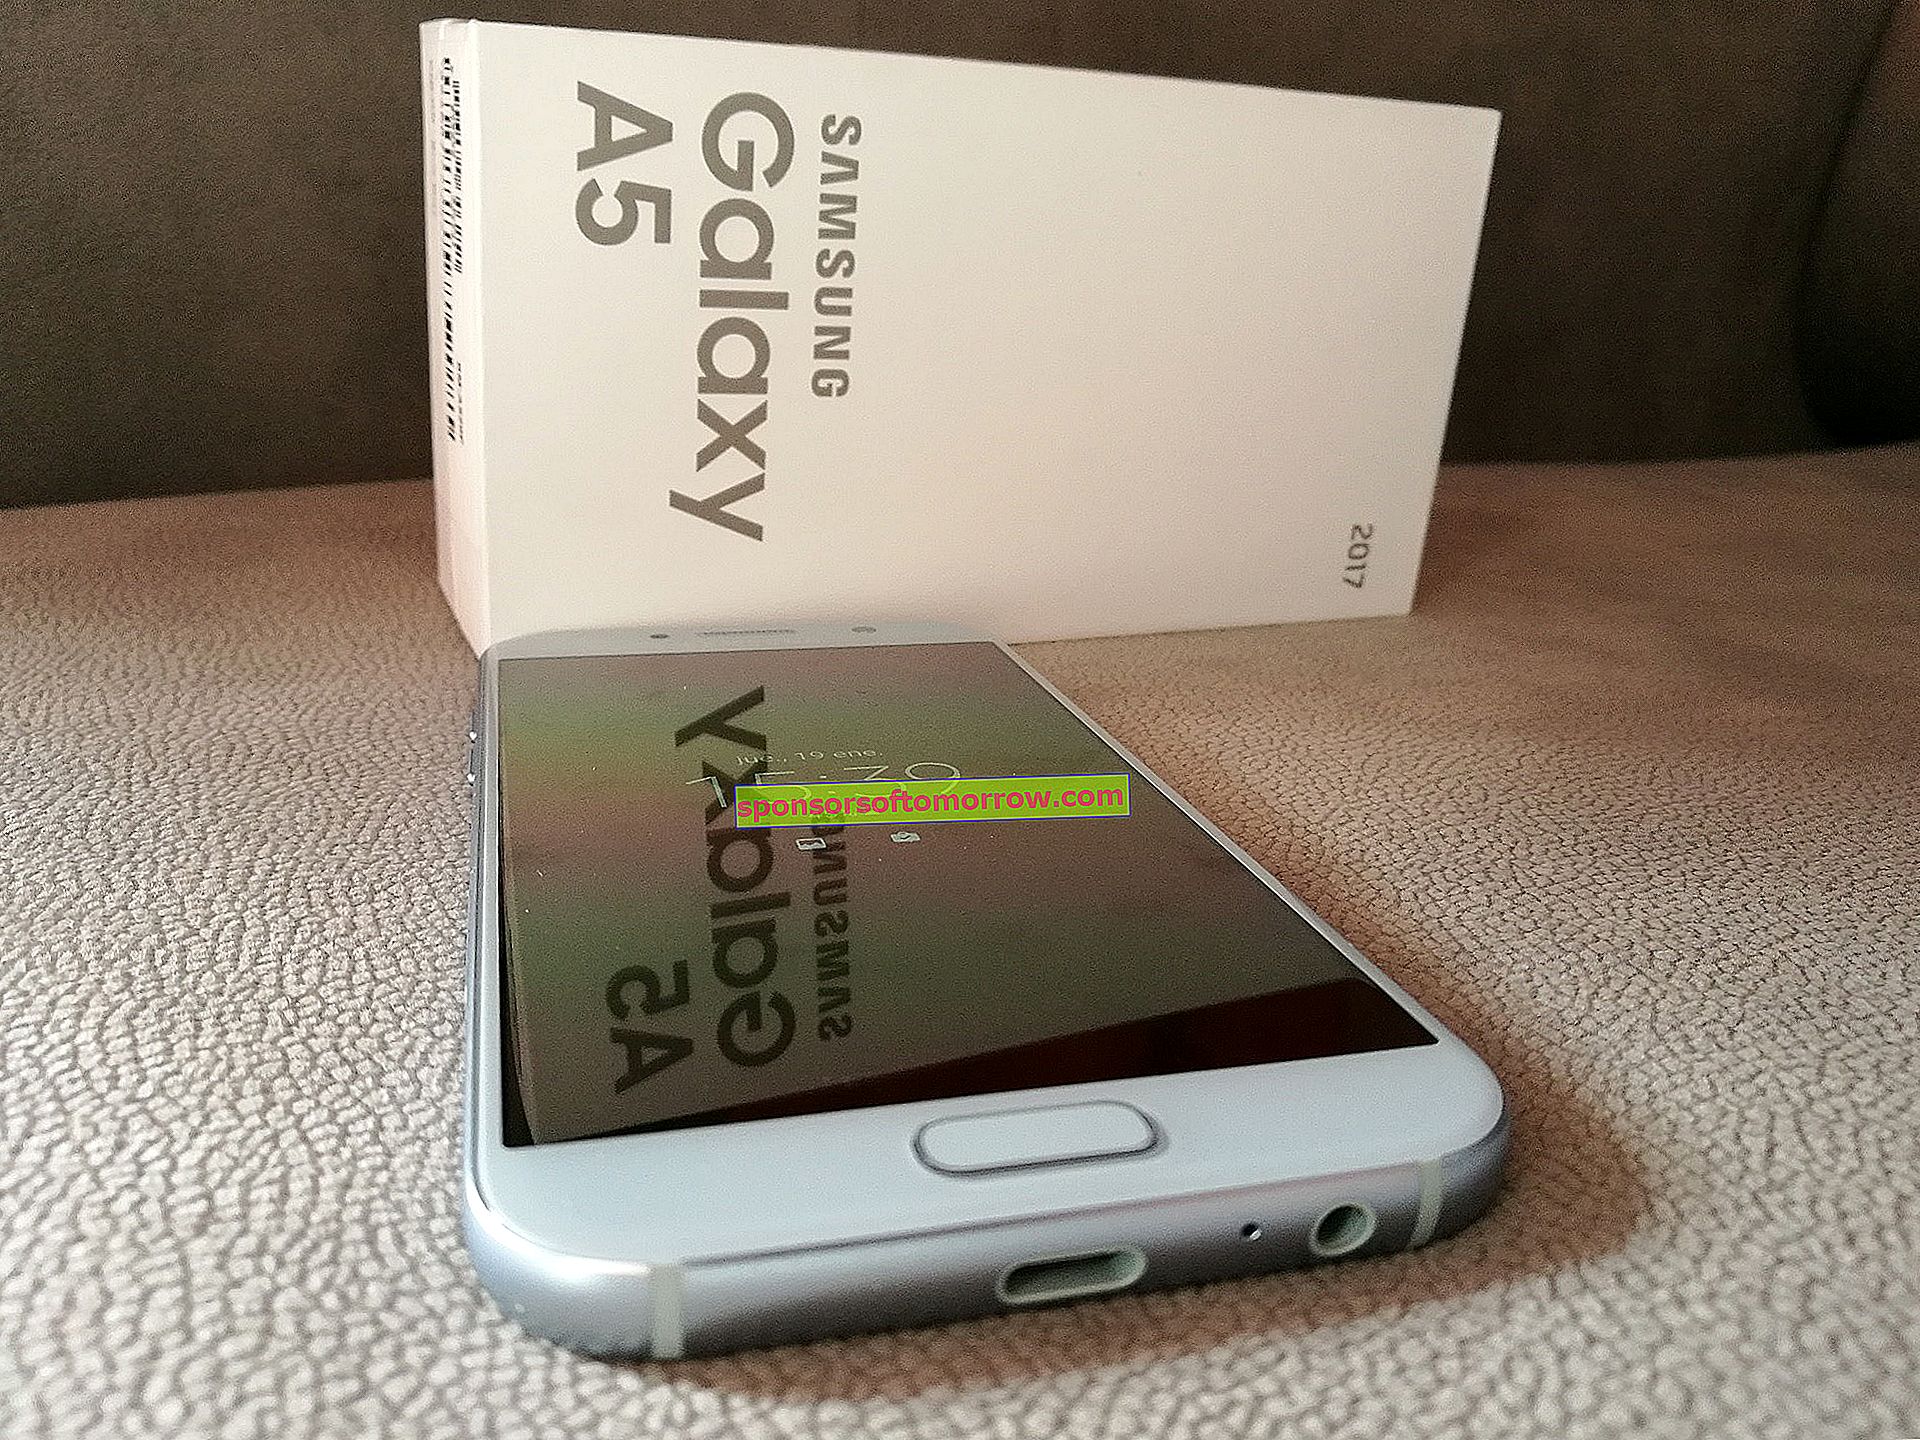 Samsung Galaxy A5 2017, nós testamos